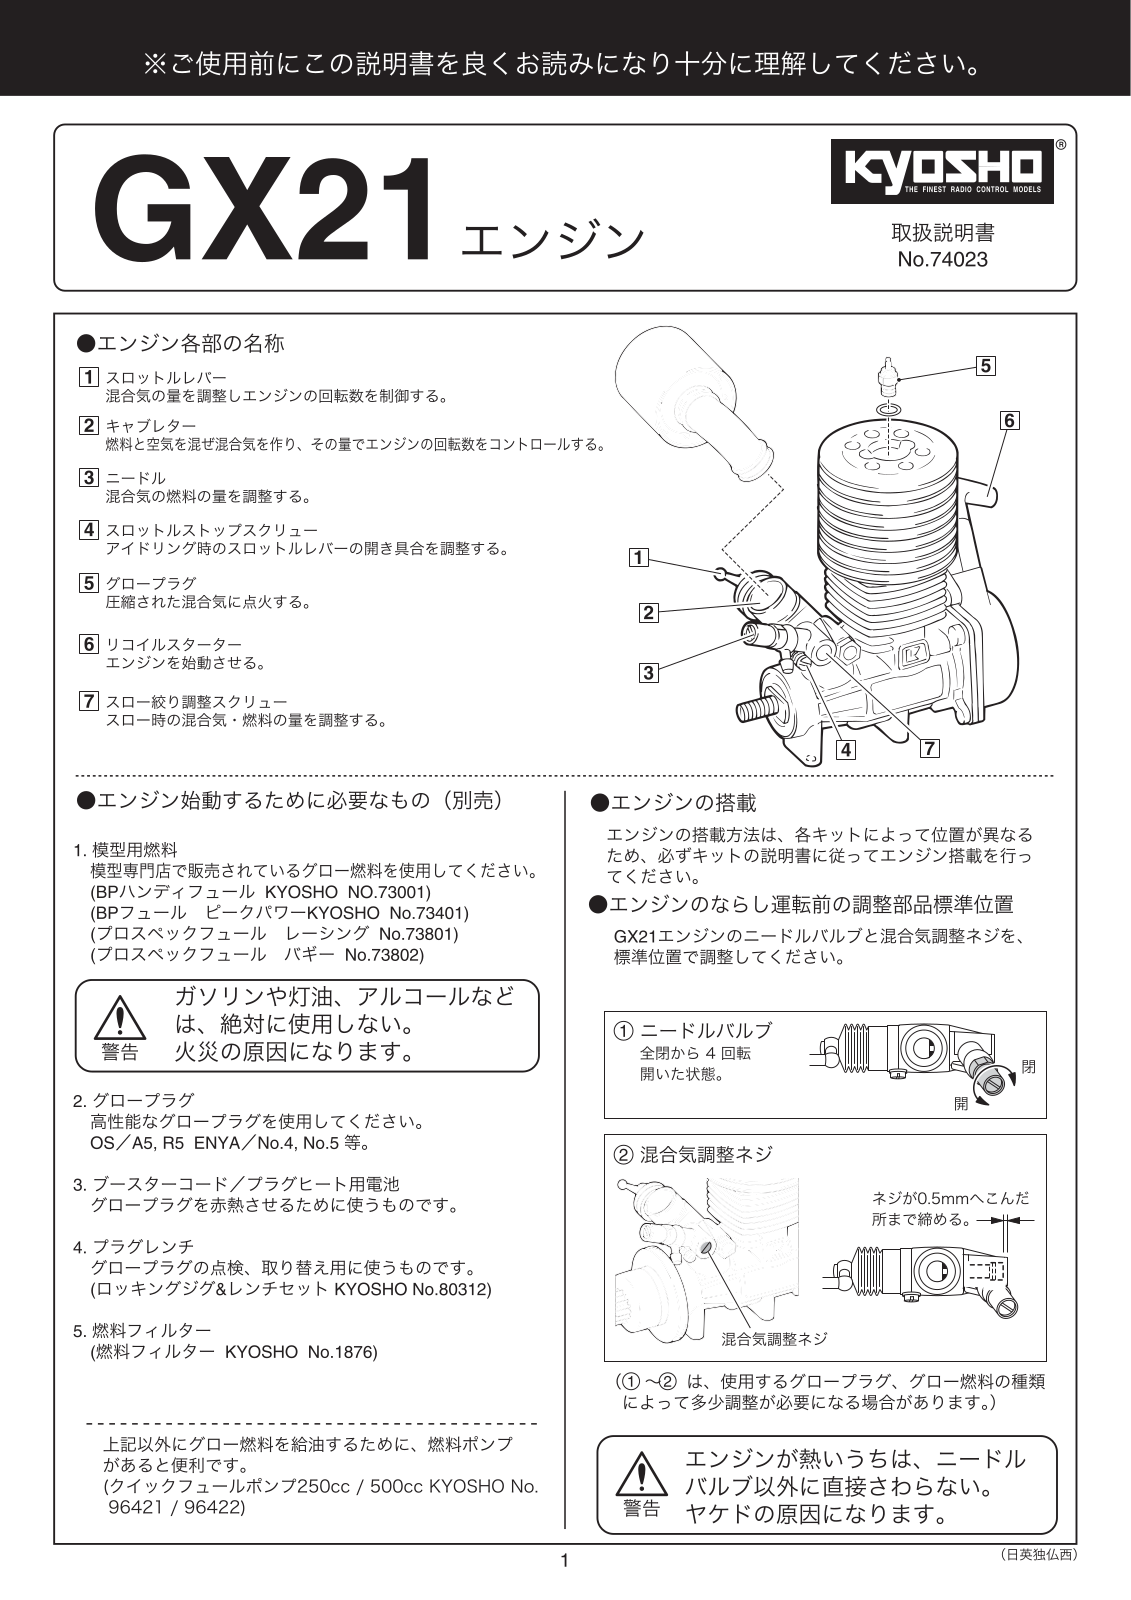 KYOSHO GX21 User Manual